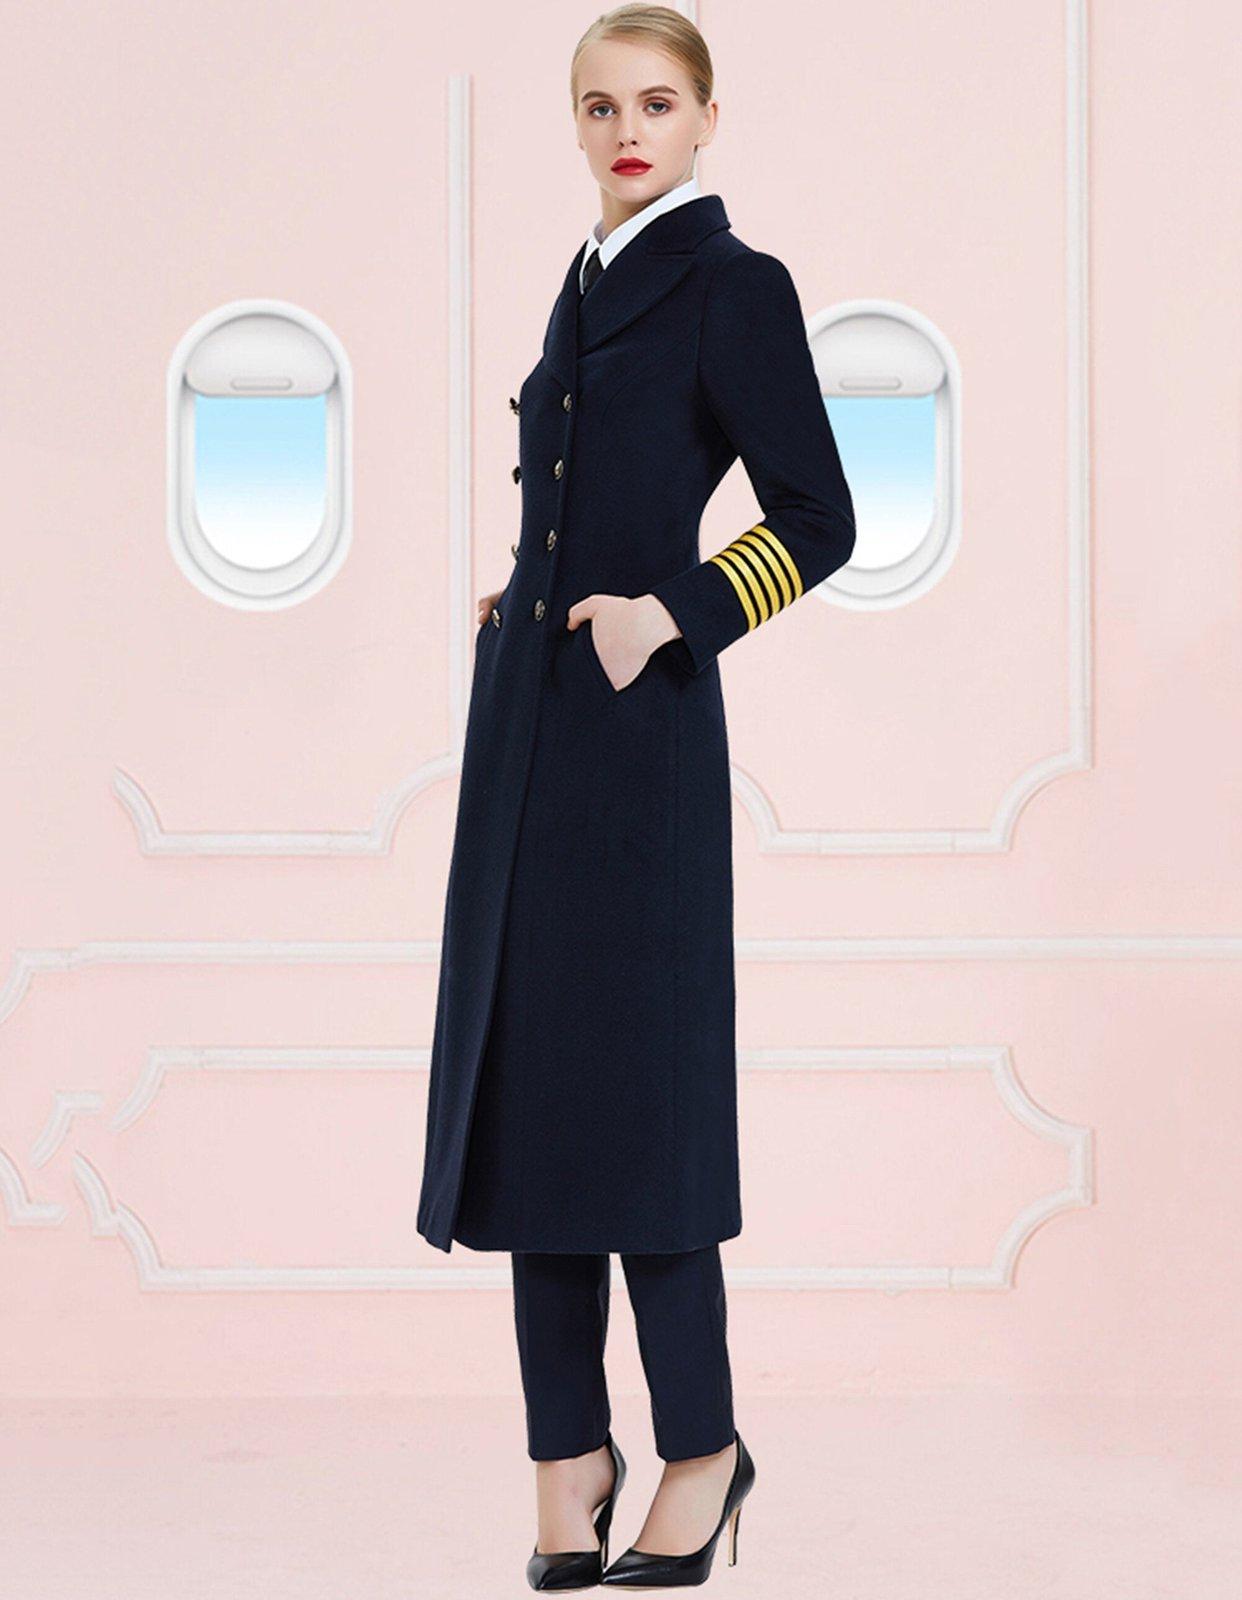 Stewardess business wear,Women Wool Blend Coat, captain woolen coat,Double-breasted button Coat,Long Coat overalls,Winter Coat,Outerwear Vivian Seven